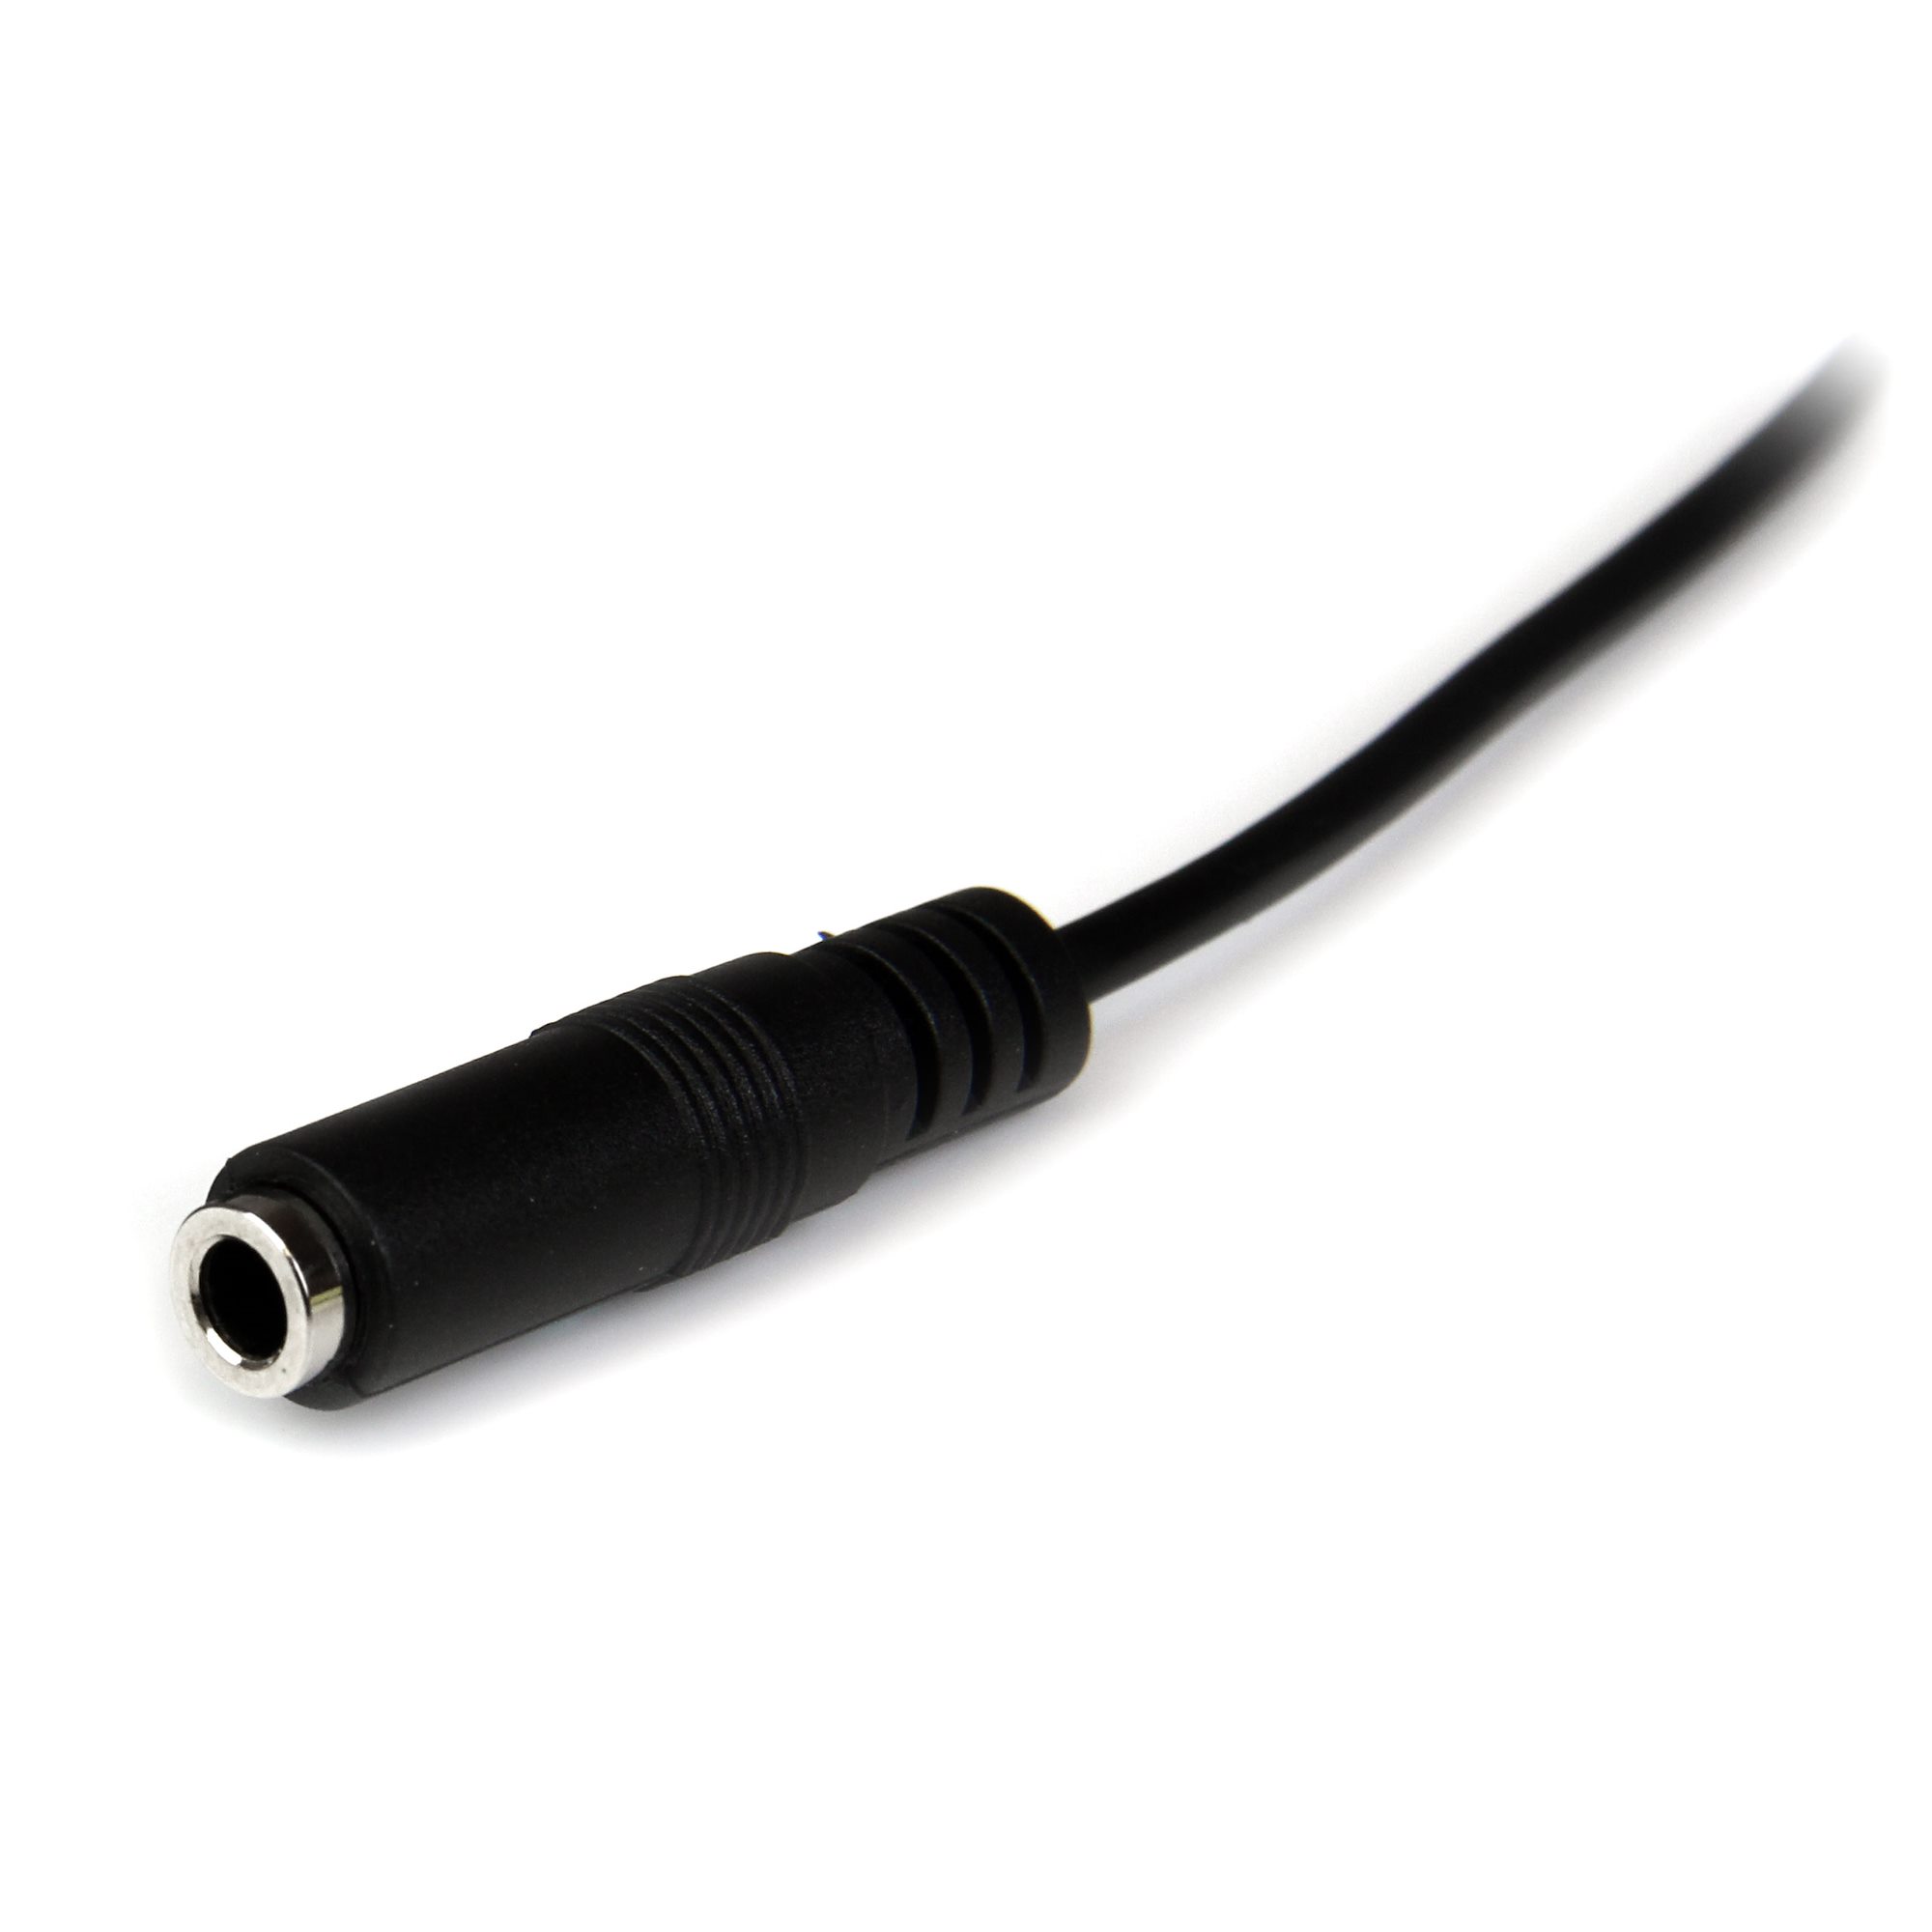 3.5mm TRS ステレオミニプラグ to lightning 又は USB Type-C変換 アダプターケーブル 変換コネクター 変換プラグ マイク接続